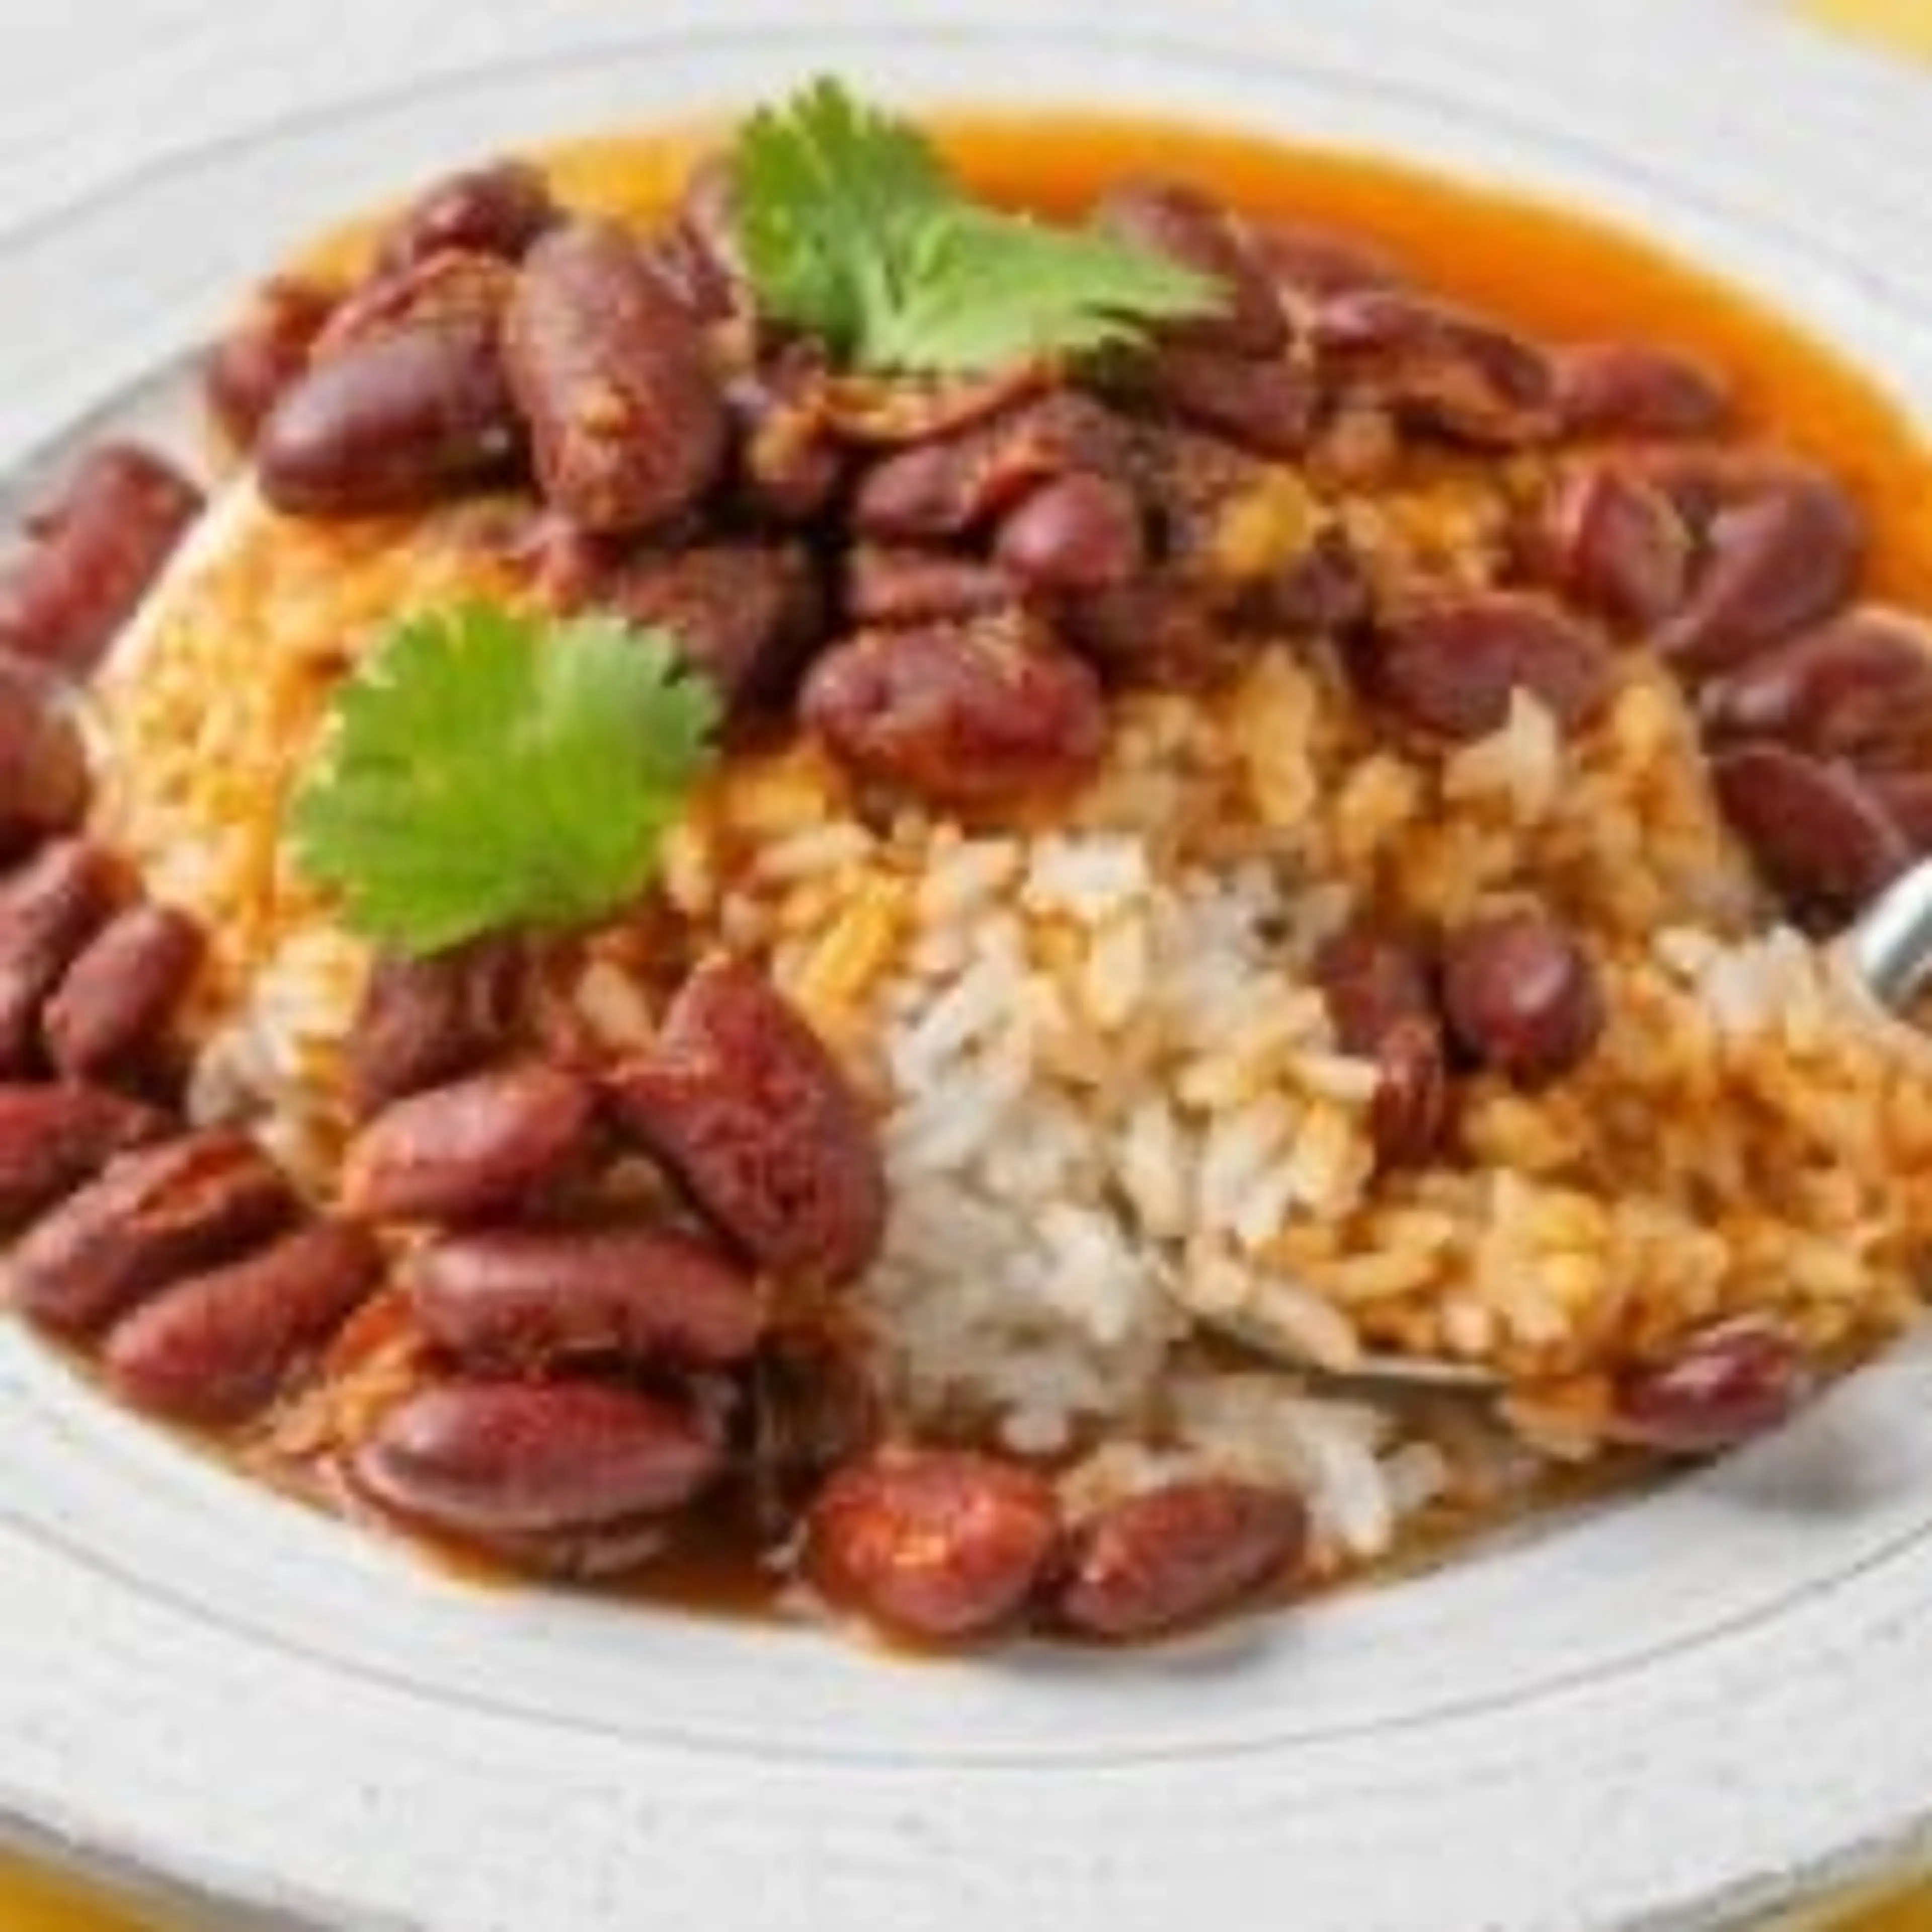 Habichuelas Guisadas (Puerto Rican Stewed Beans)